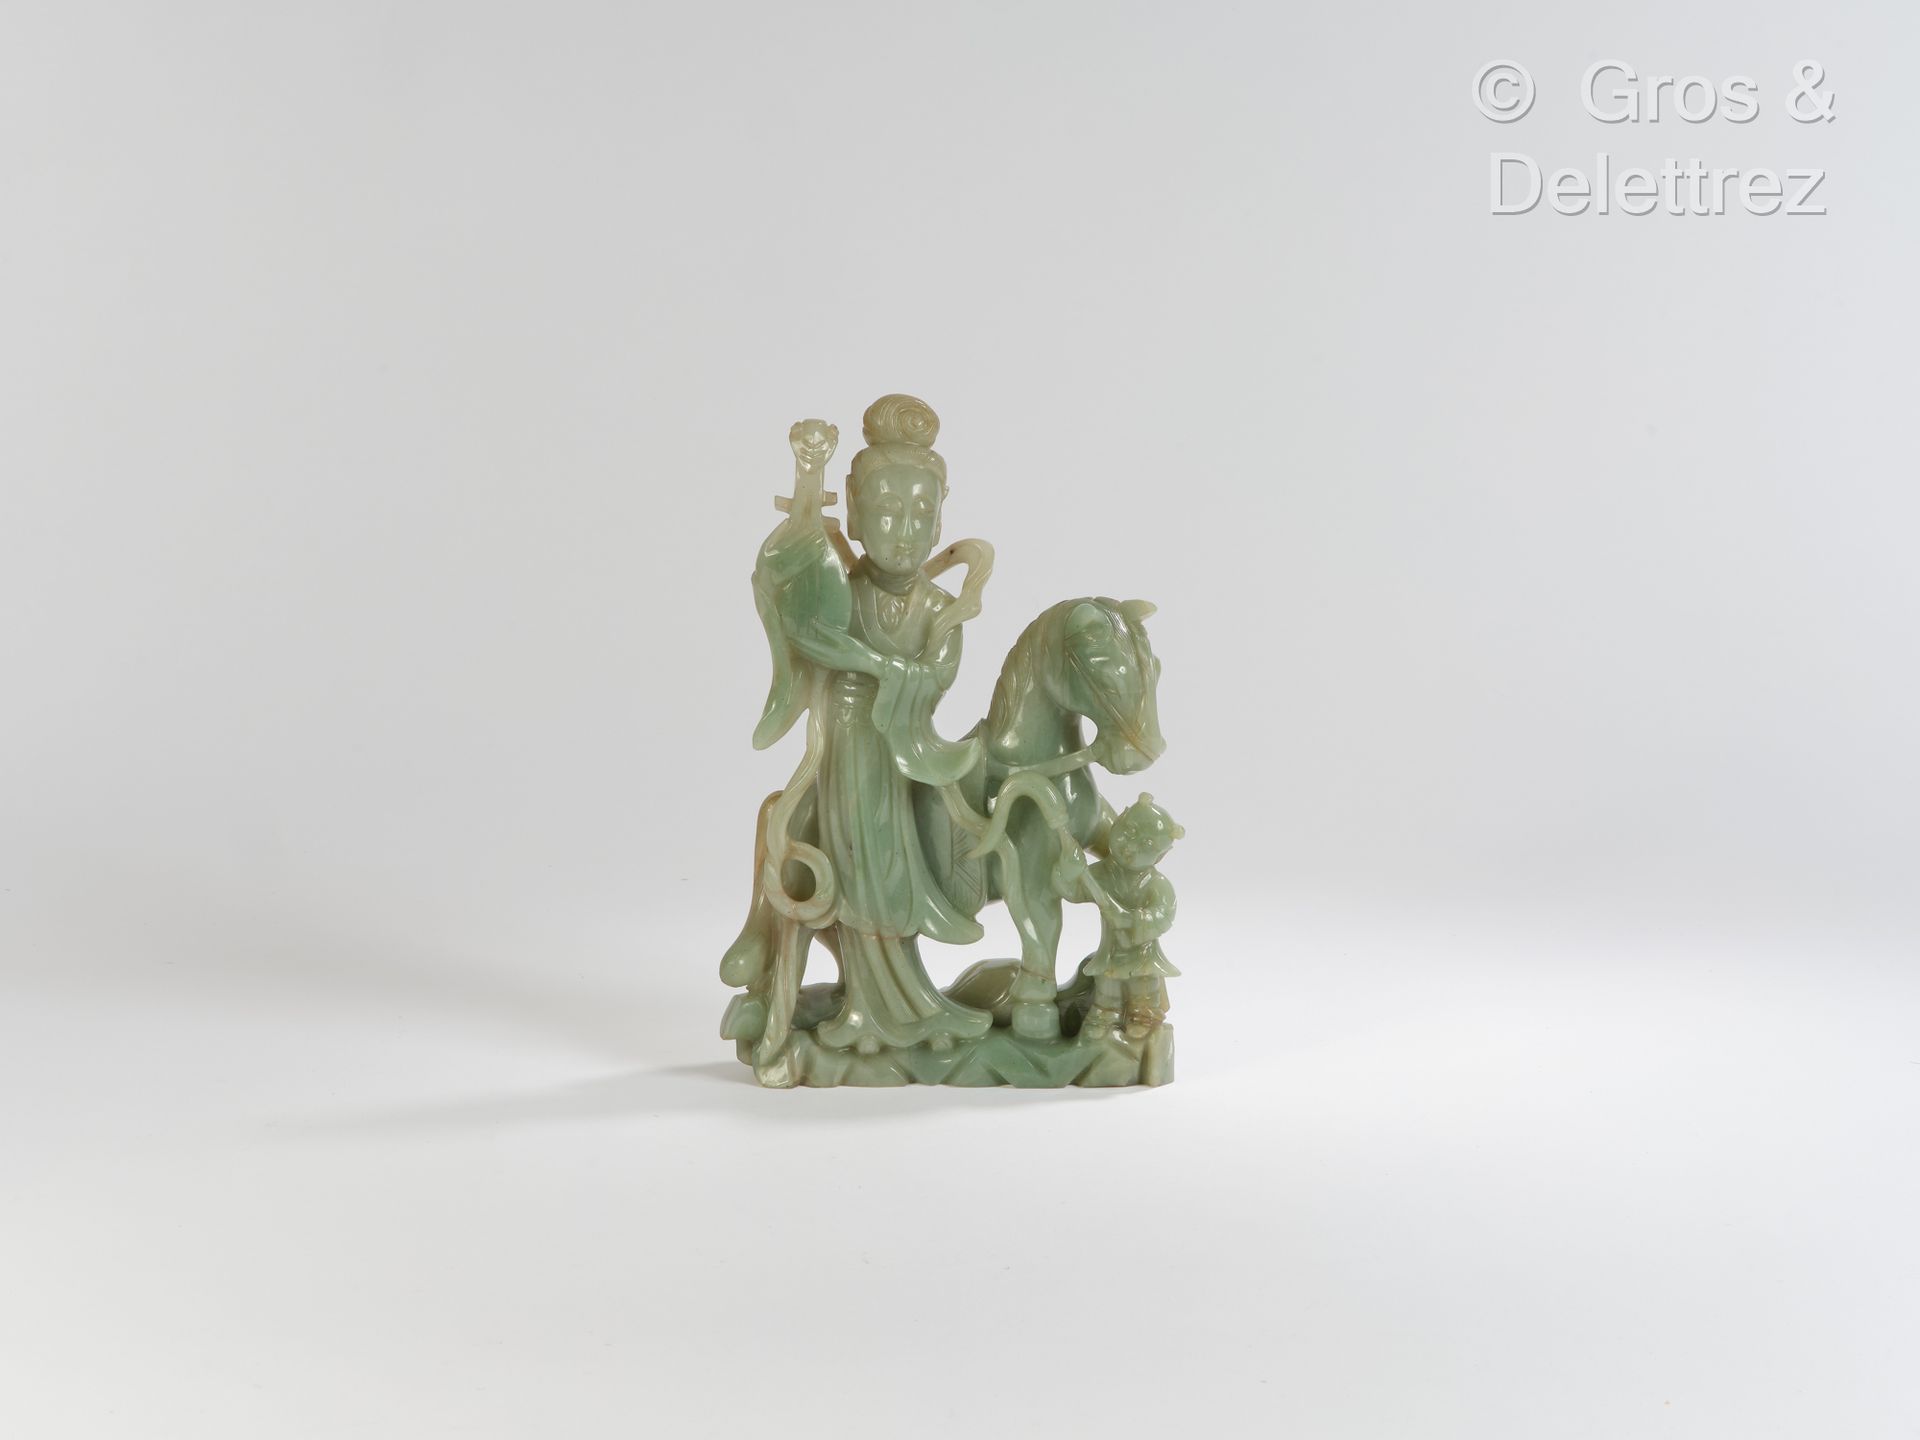 Null 中国 约1920年
绿色浸润的翡翠组，描绘了一个手持琵琶的女音乐家，并有一个骑马的孩子陪伴。
高度：23厘米